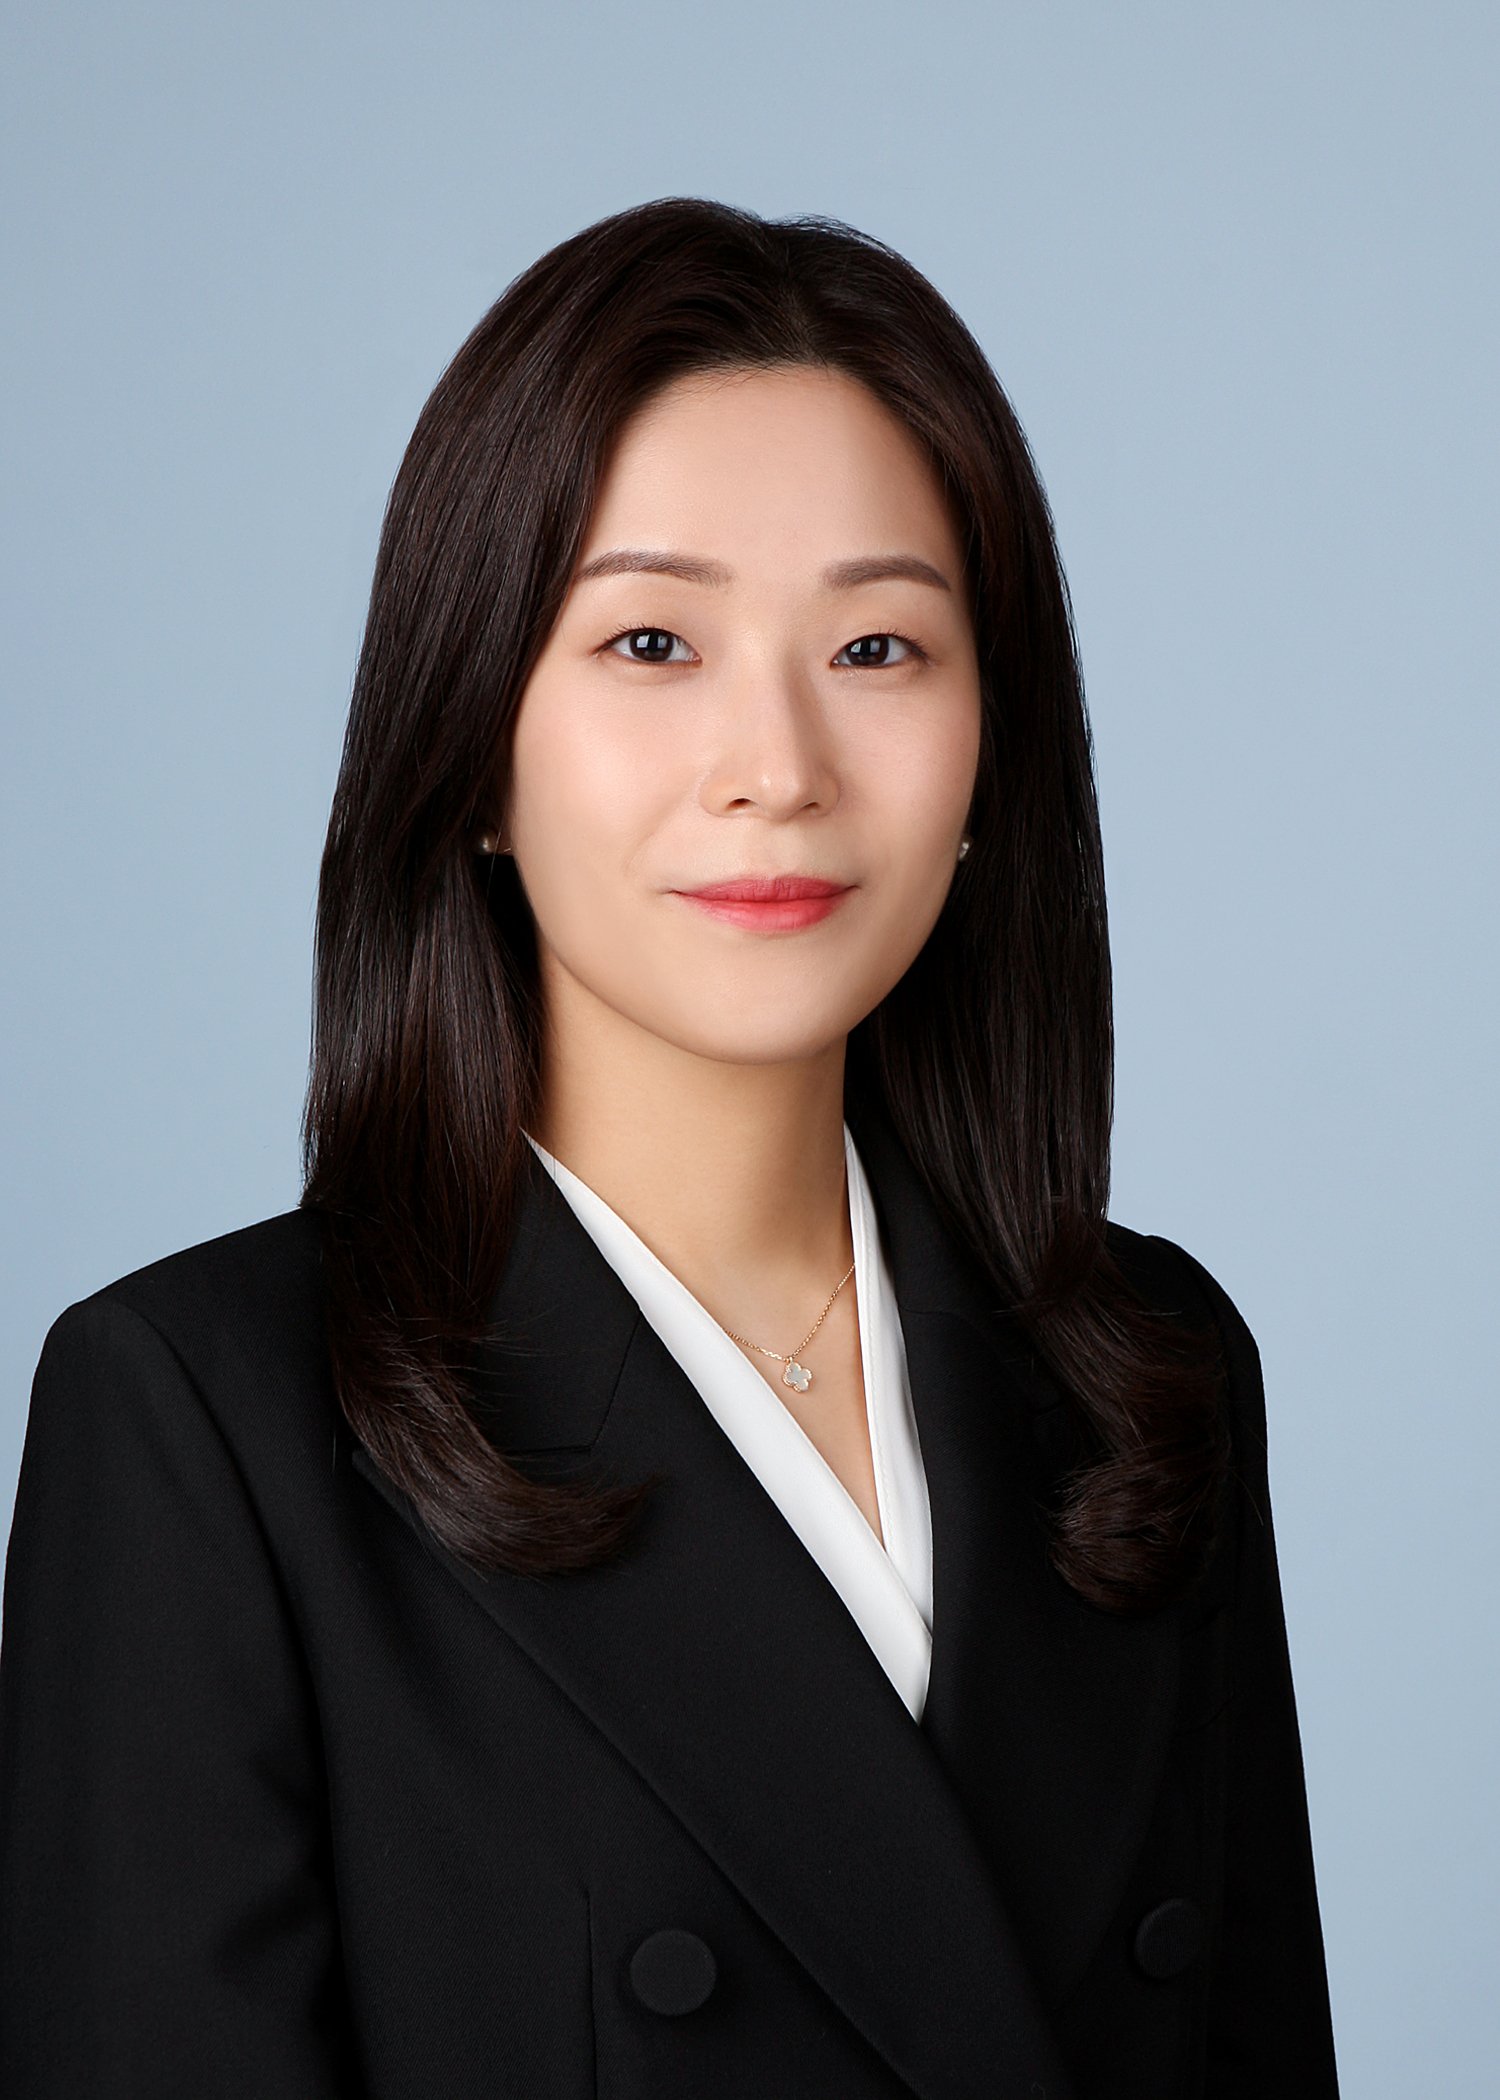 Seyoung Choe